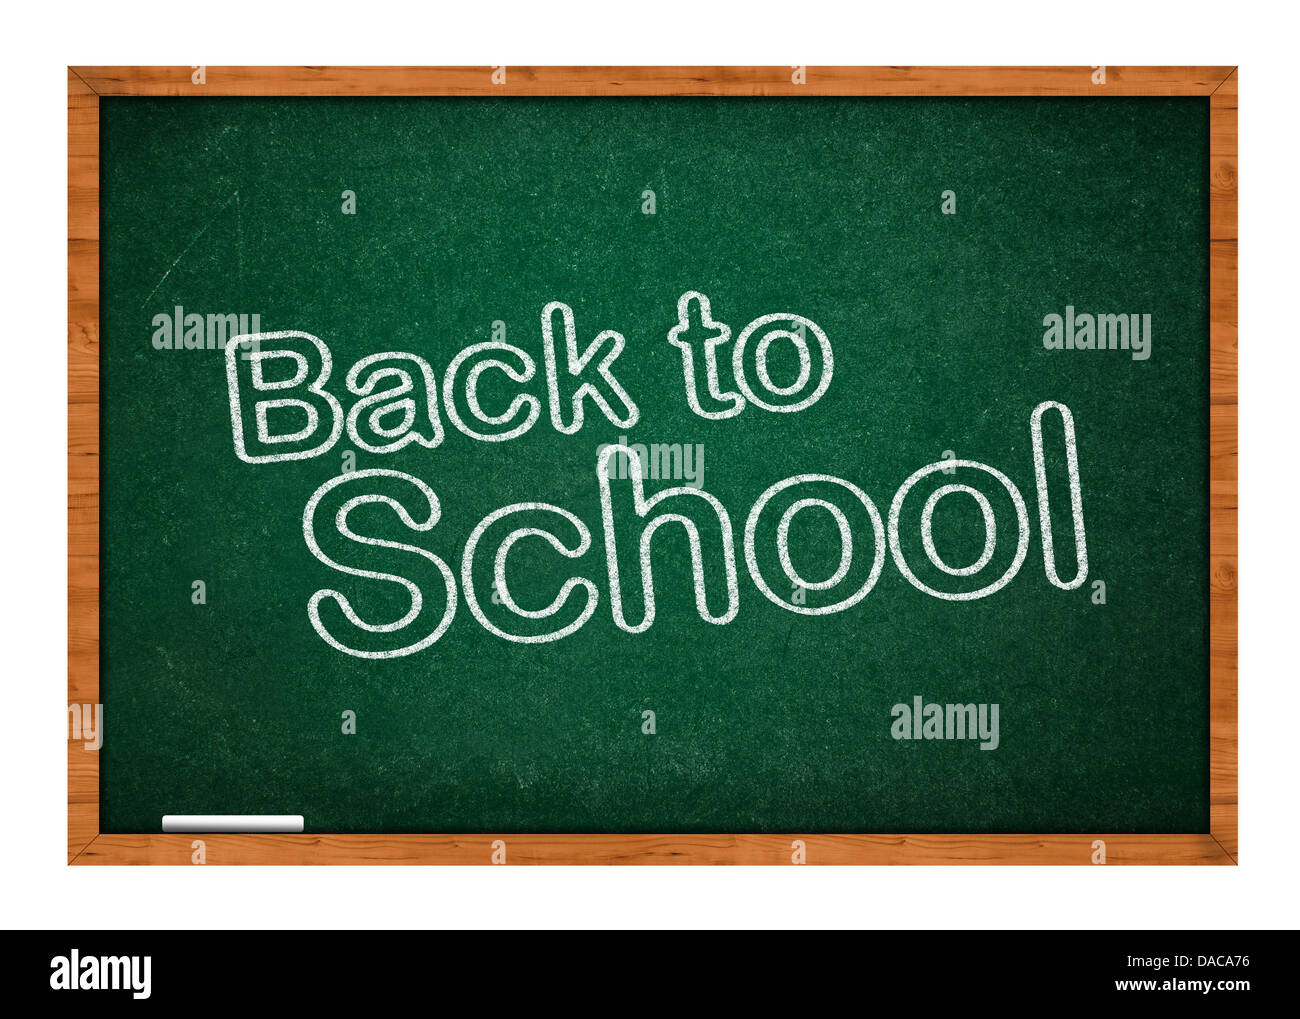 back to school on a green classroom chalkboard. Stock Photo